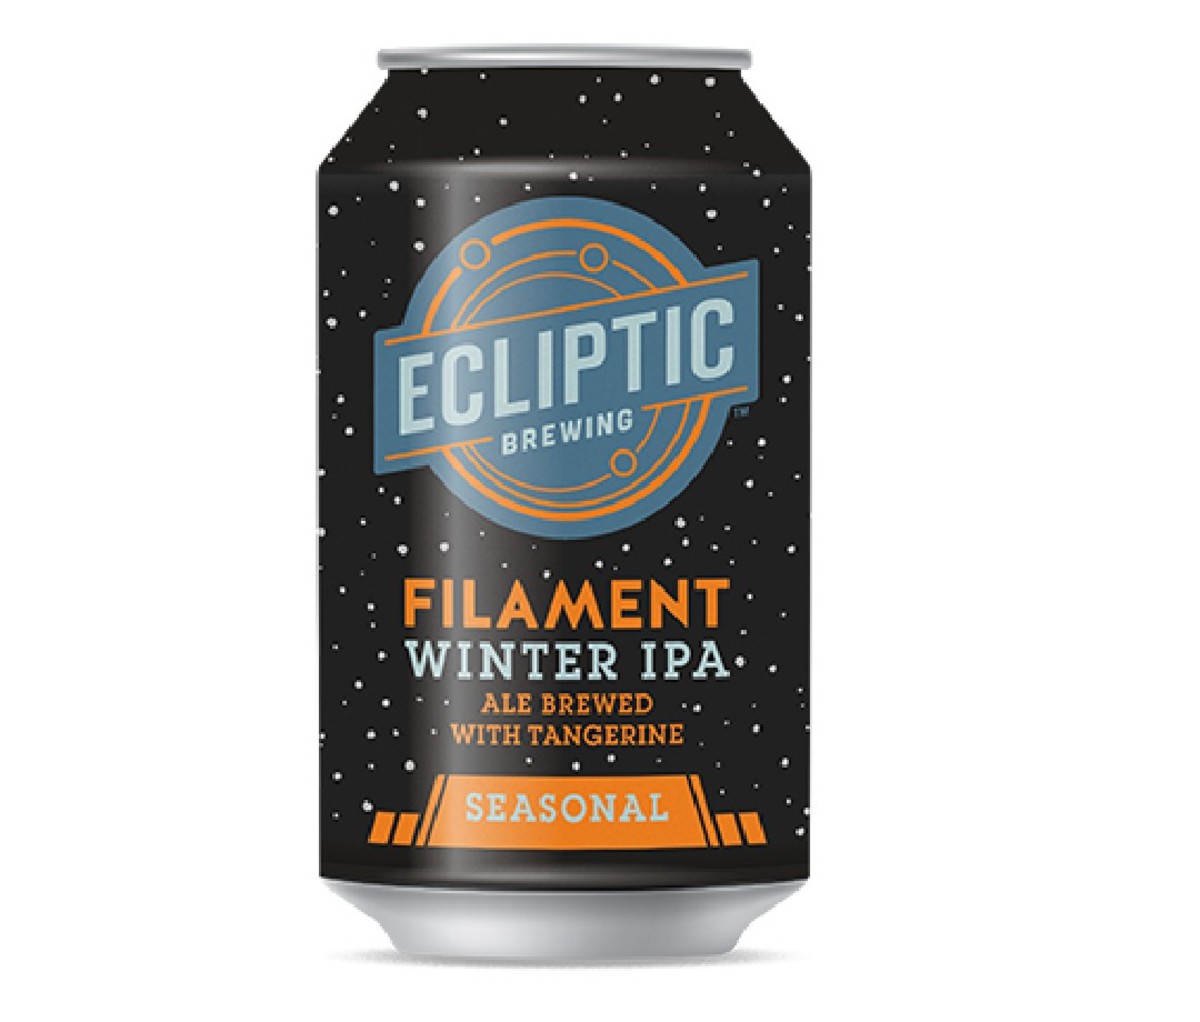 12 oz can of Ecliptic Filament Winter IPA